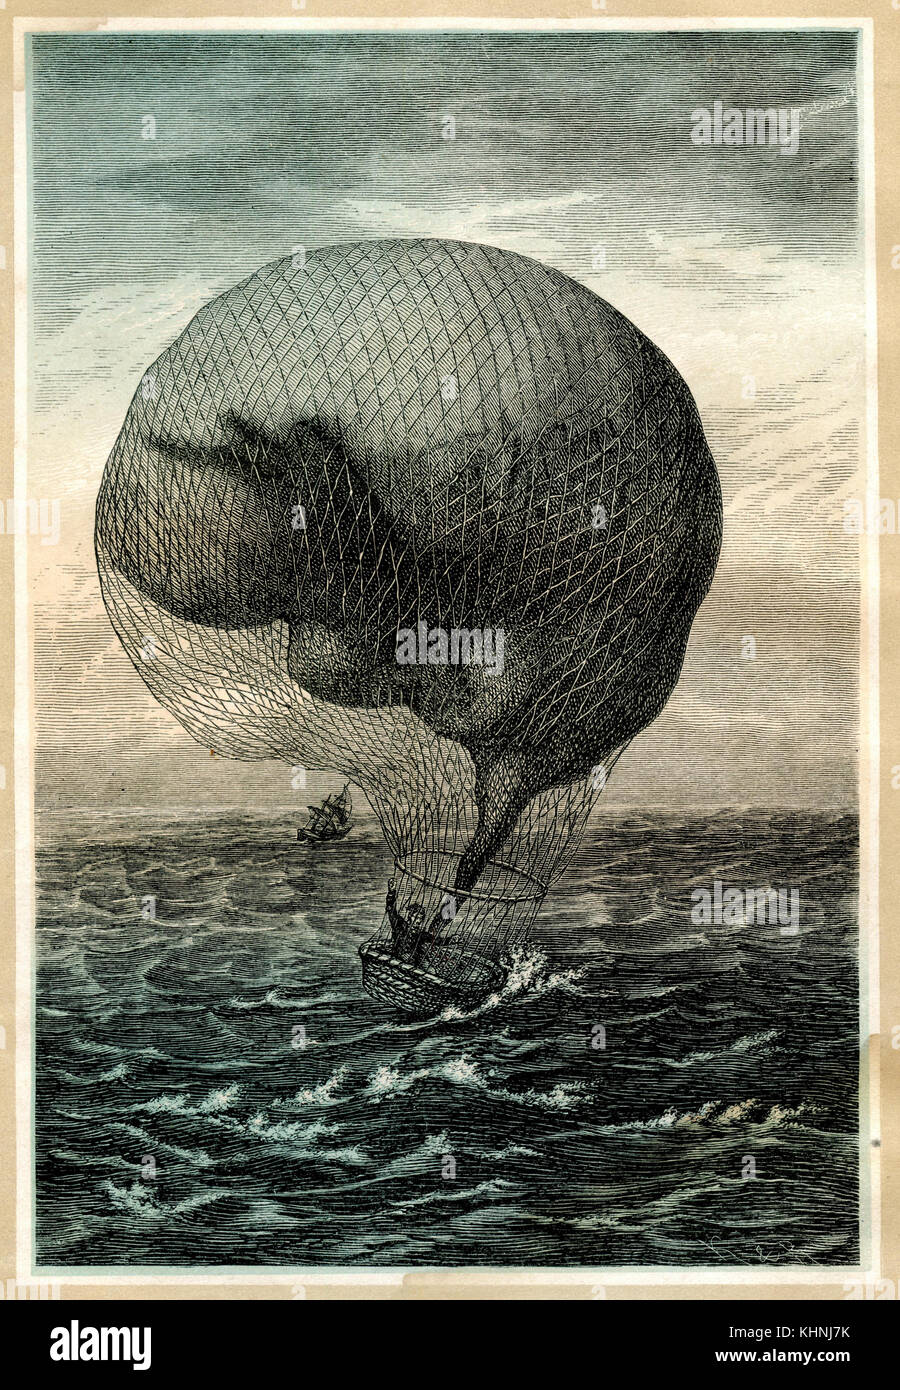 A hot air balloon crashed into the sea (Absturz eines Heißluftballons ins Meer) Stock Photo